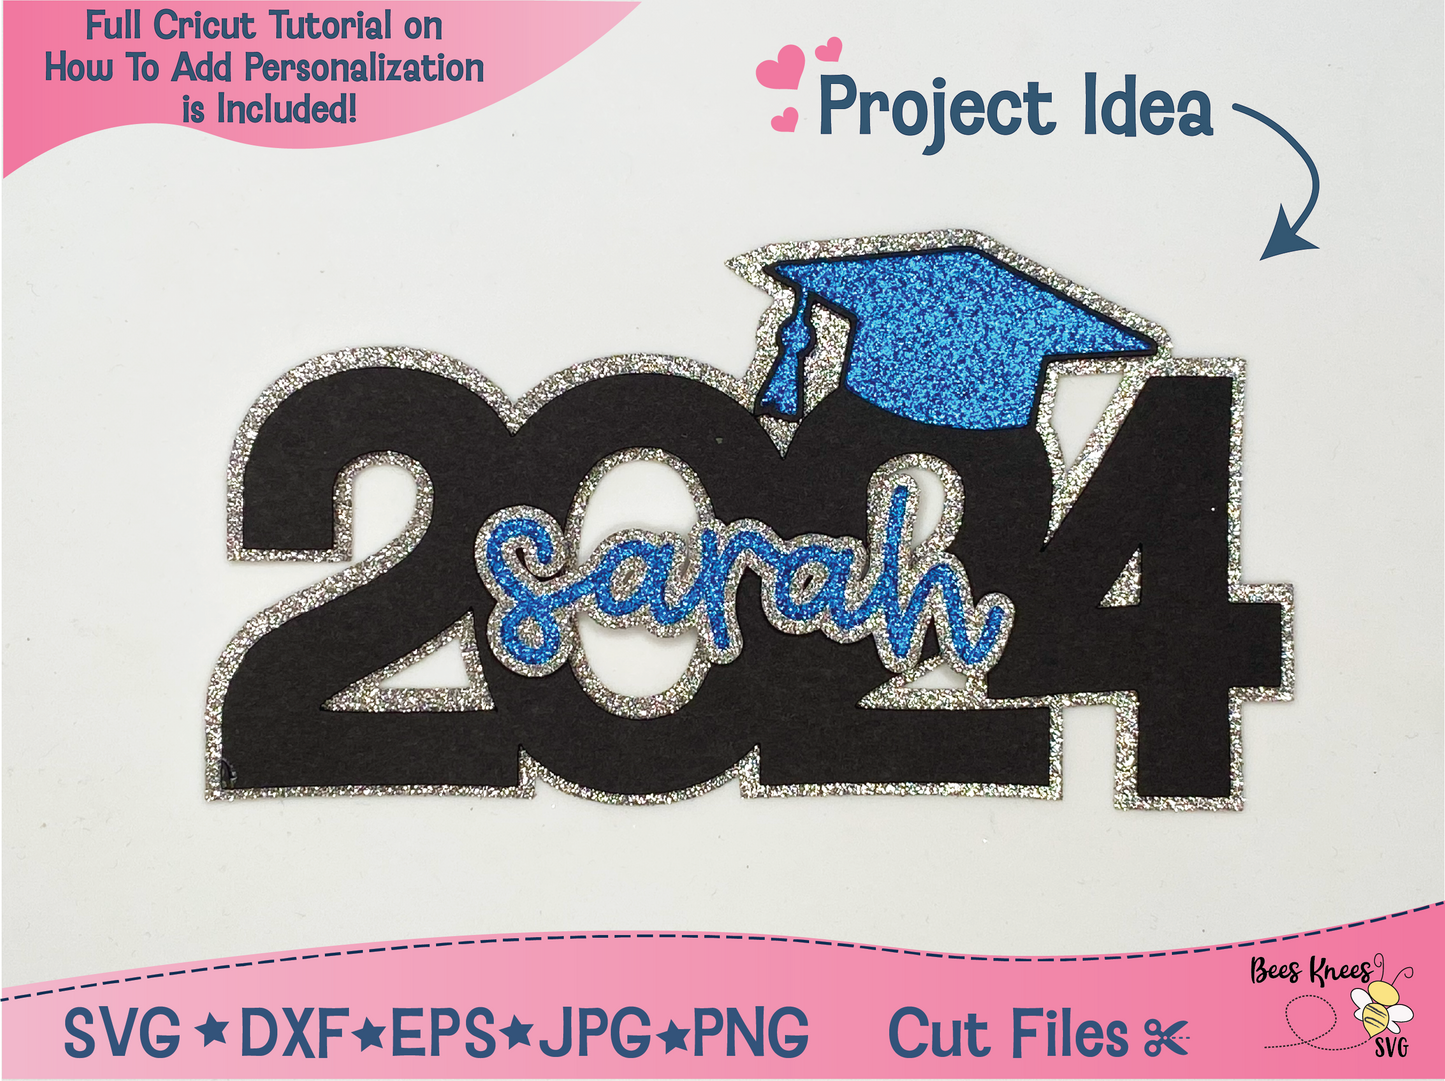 2024 Graduation with Cap SVG Cut File